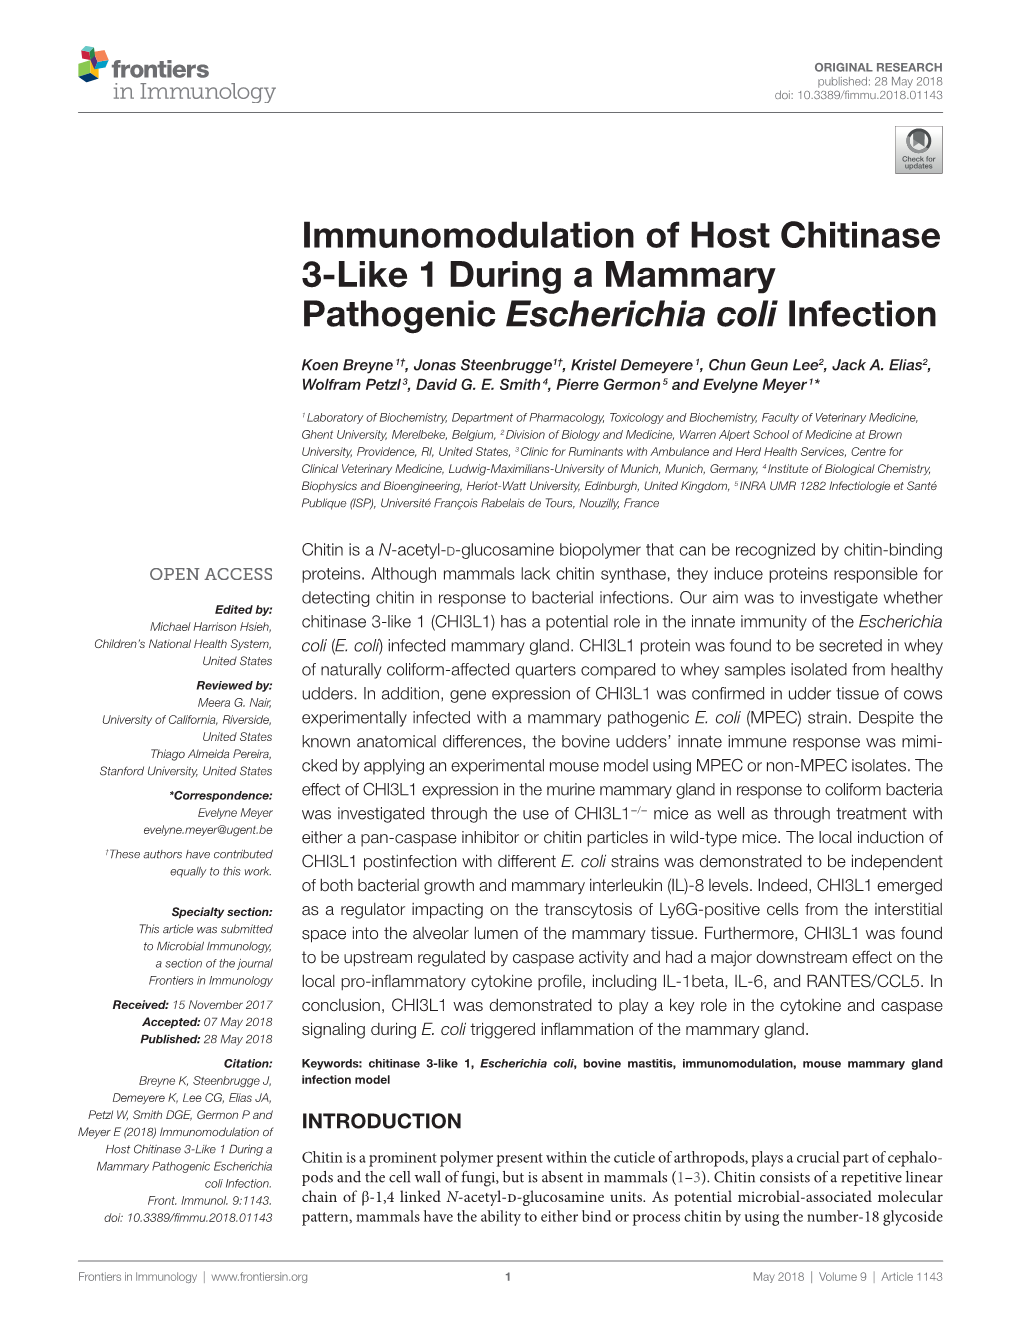 Immunomodulation of Host Chitinase 3-Like 1 During a Mammary Pathogenic Escherichia Coli Infection